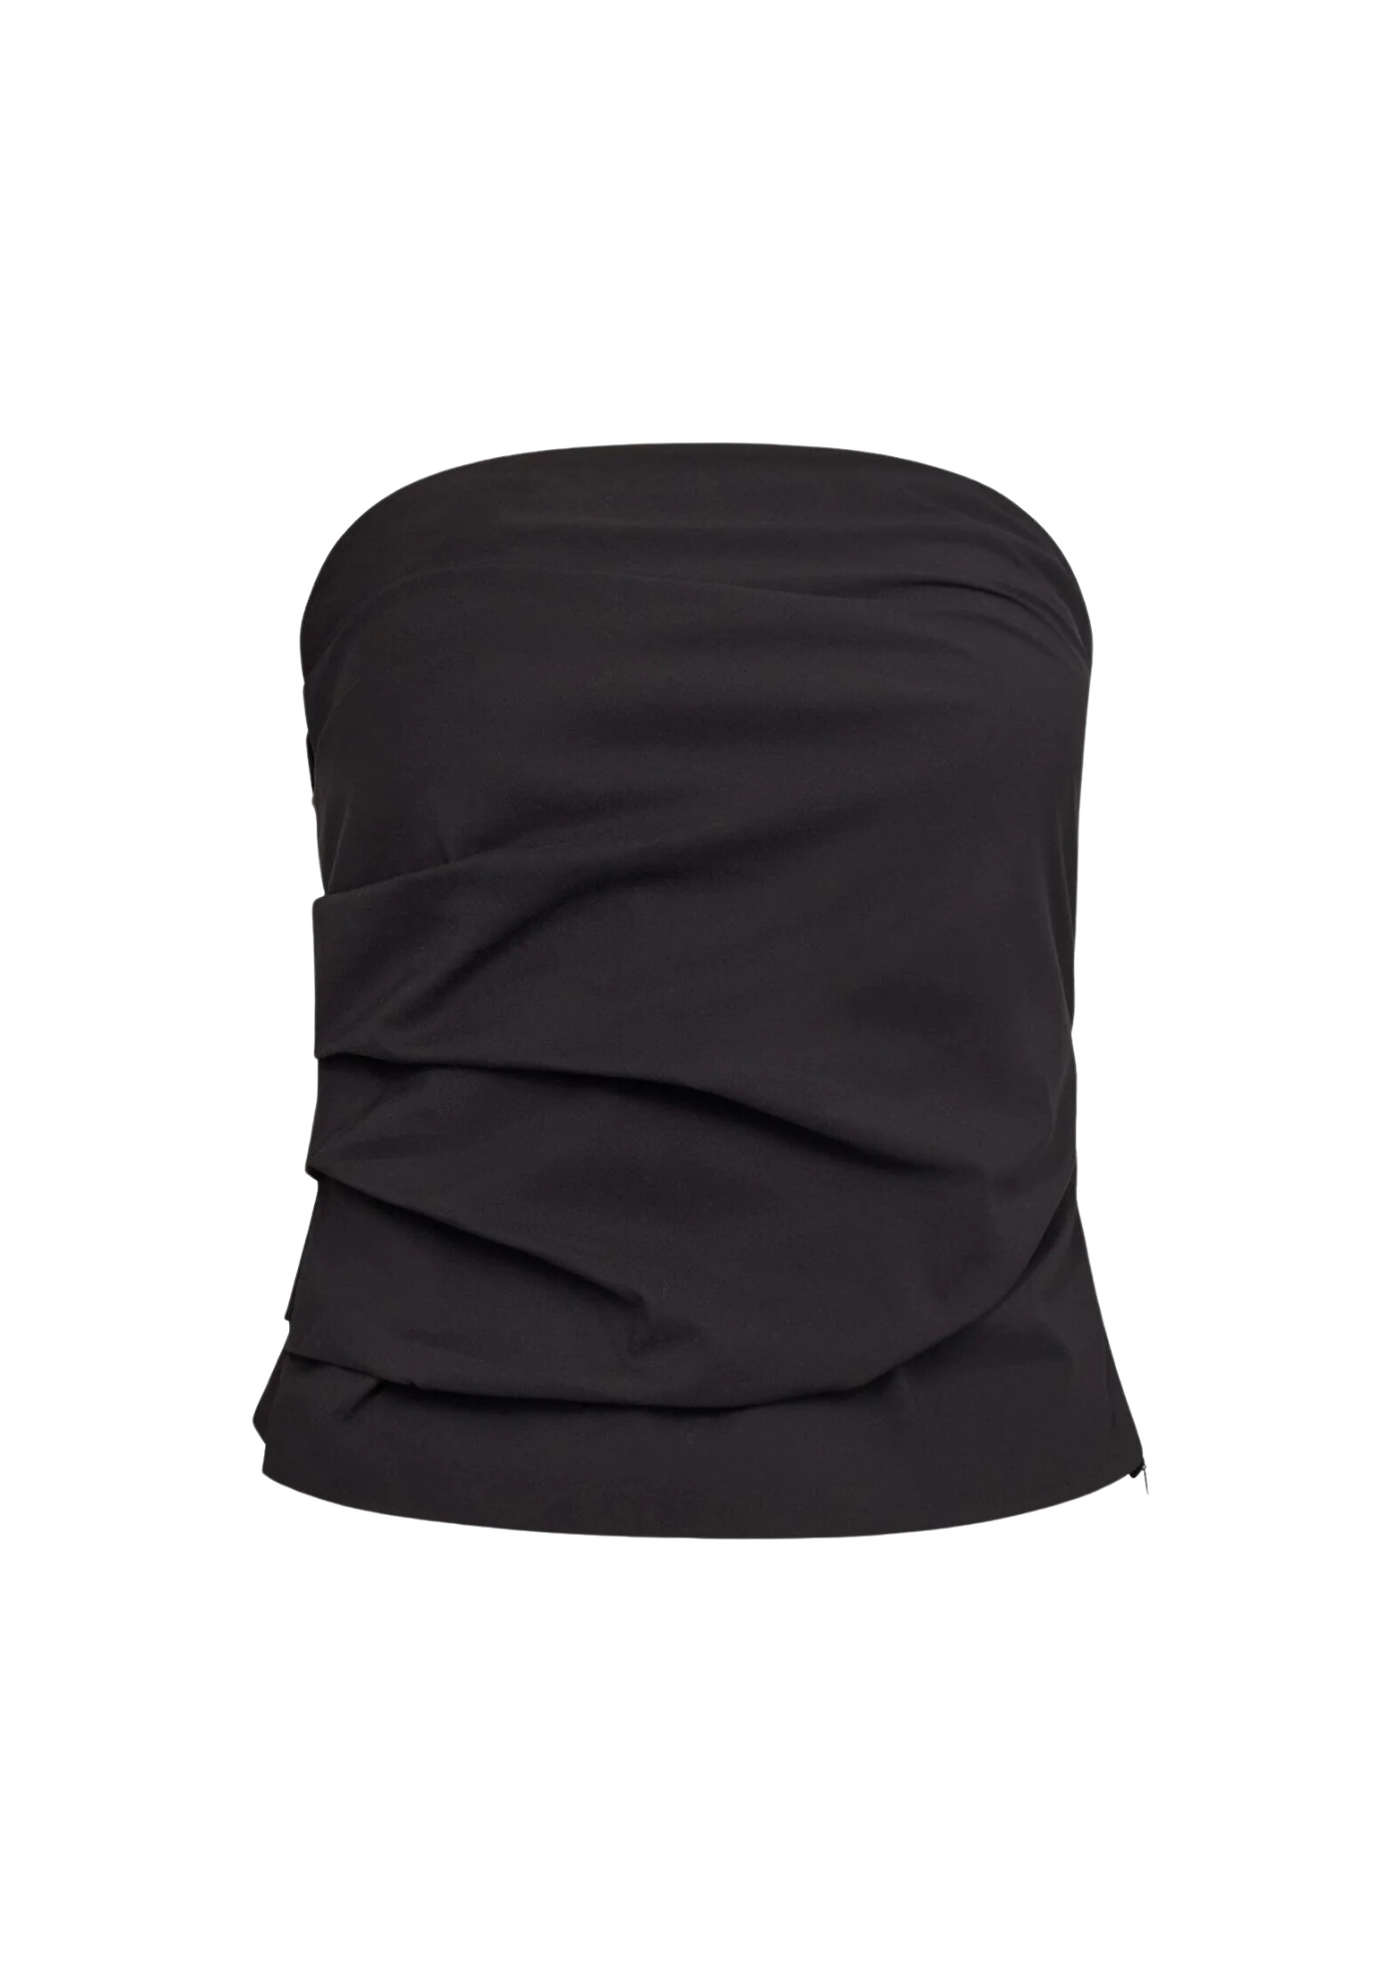 Co' Couture |CottonCC Strapless Top Black